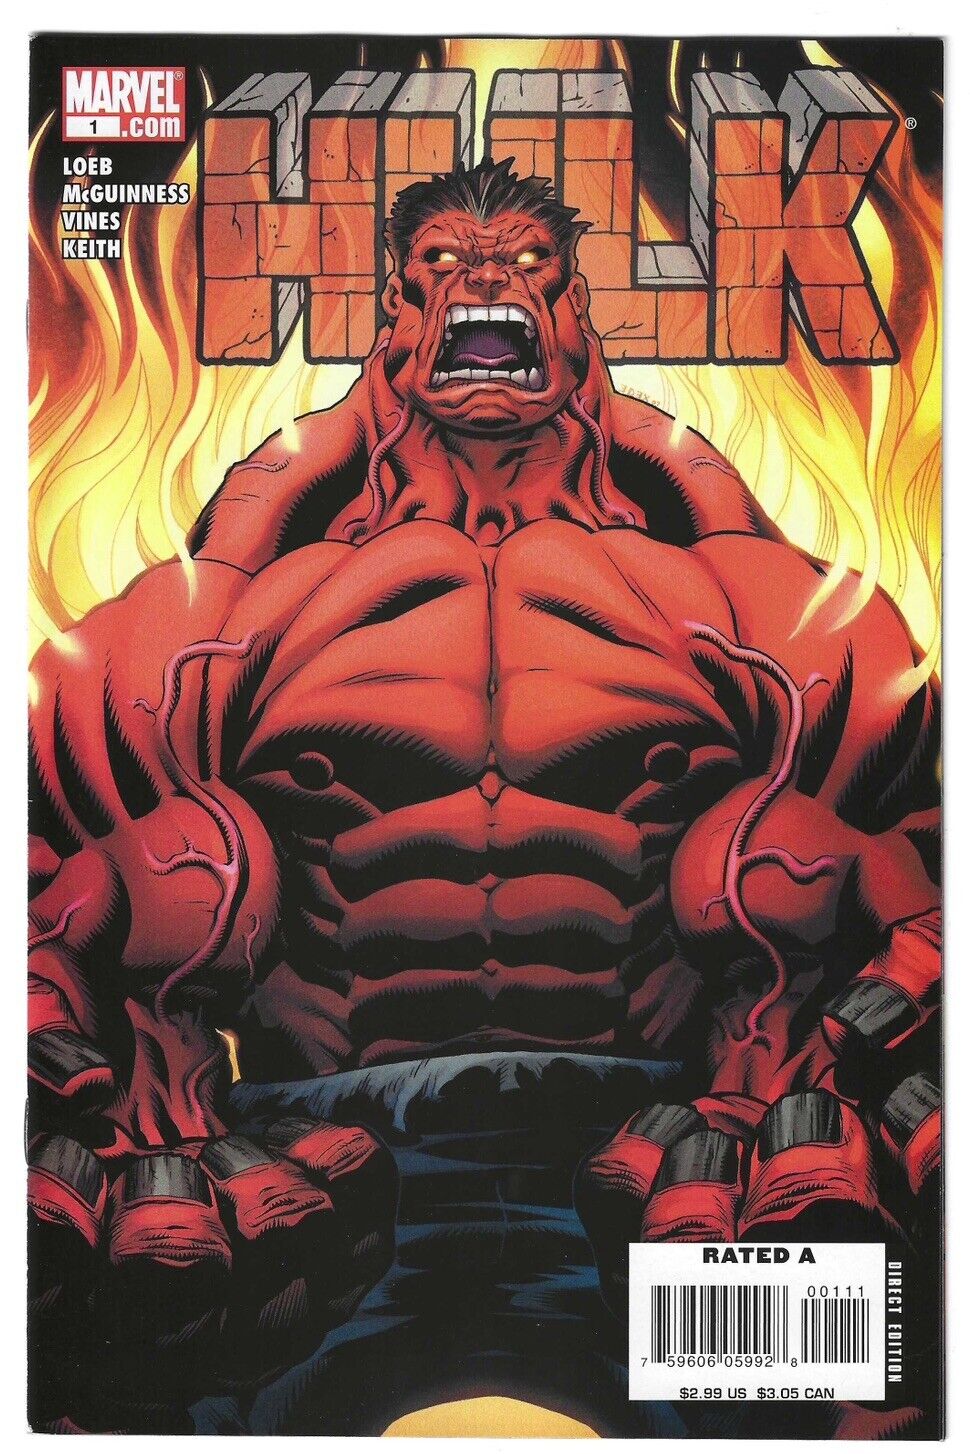 The Hulk #1 (Marvel Comics March 2008)